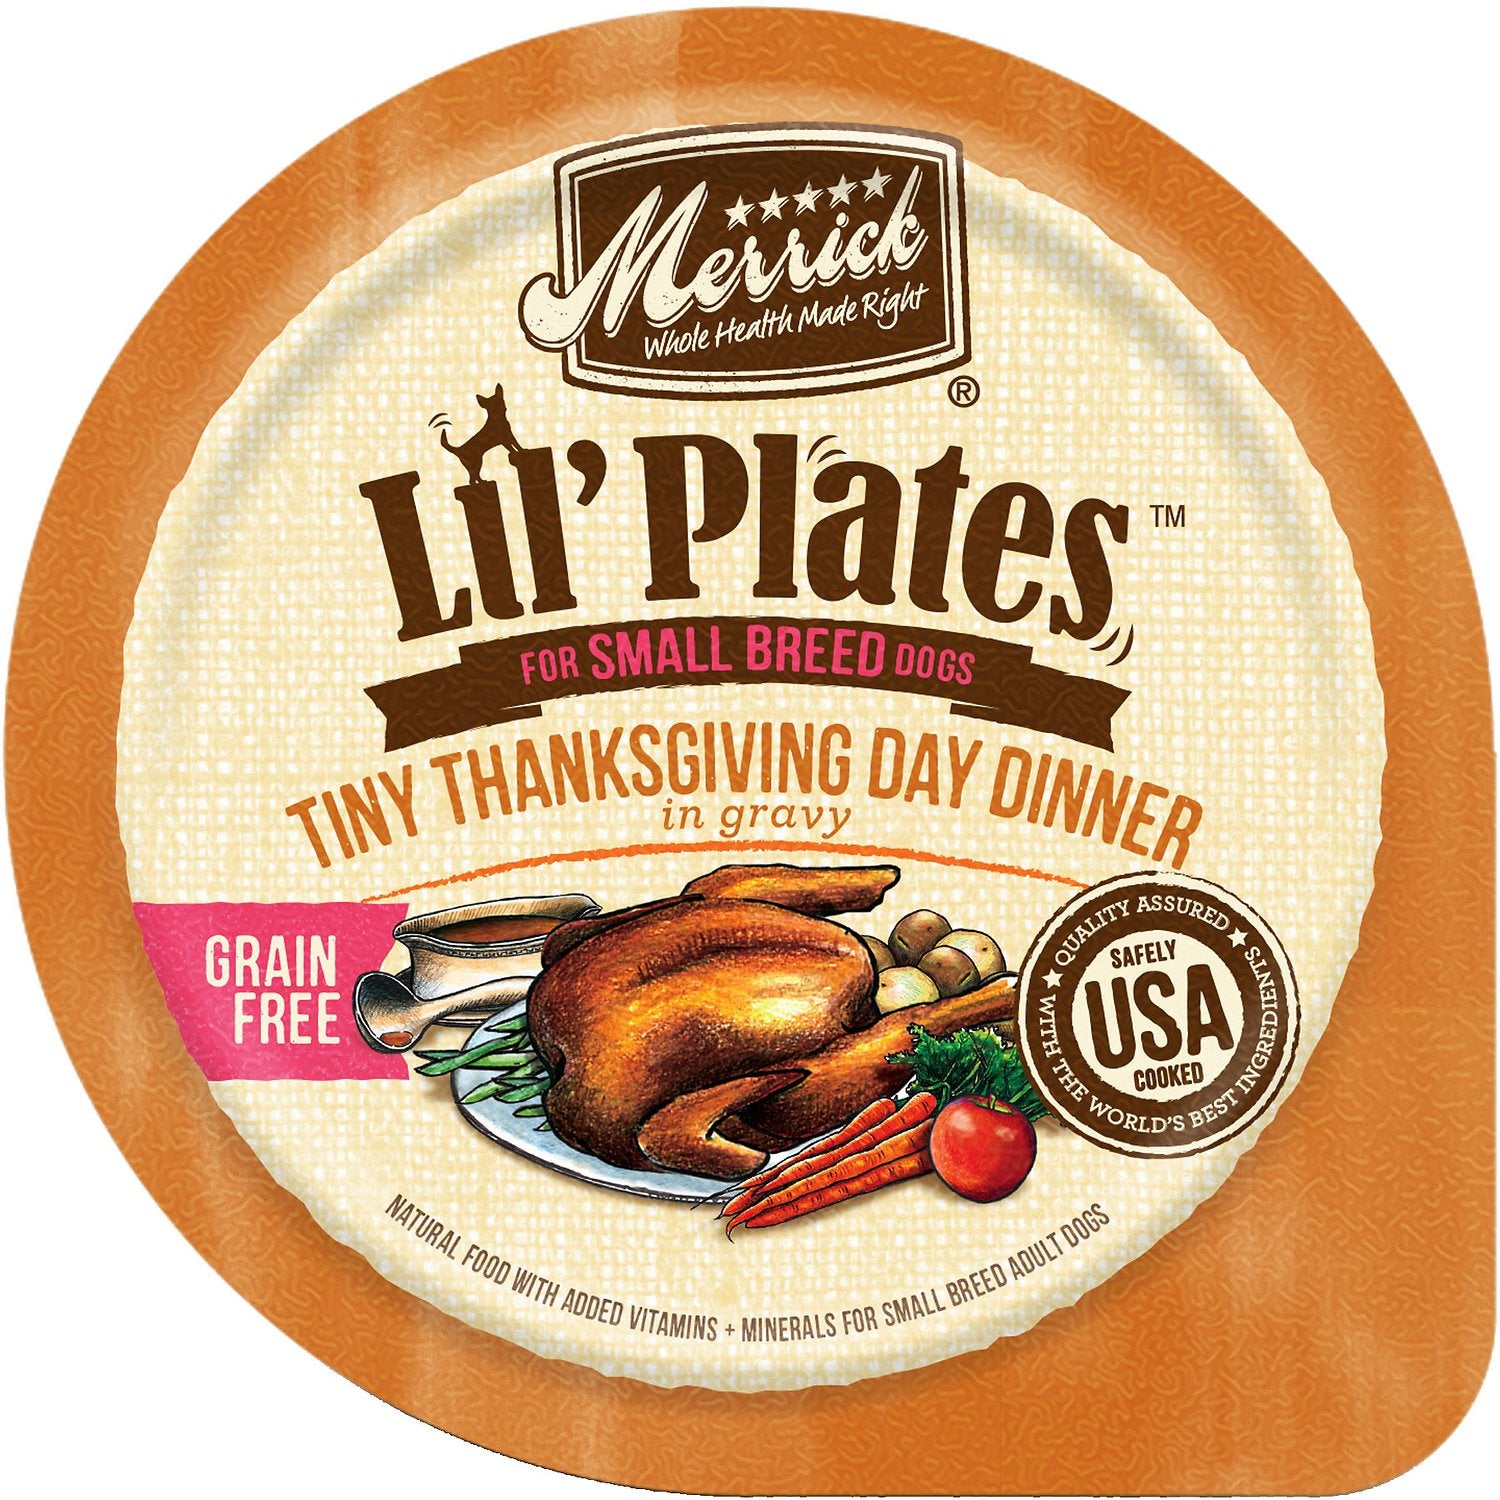 Merrick Lil' Plates Grain Free Variety Pack Tiny Thanksgiving Day Dinner(Wet Dog Food)